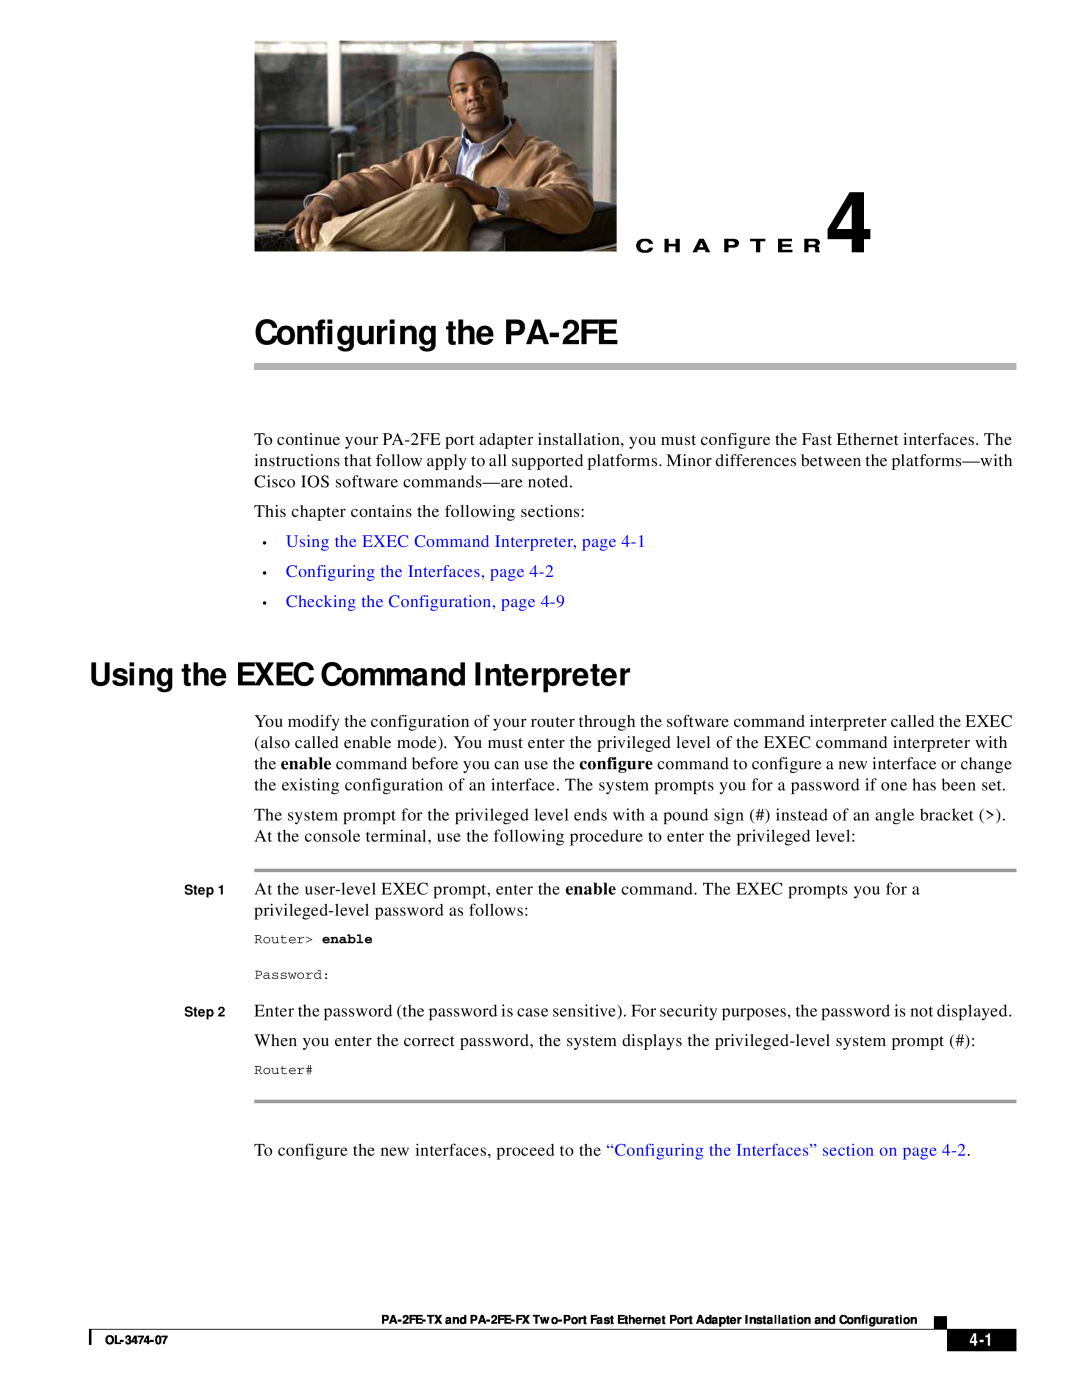 Cisco Systems PA-2FE-FX, PA-2FE-TX manual Configuring the PA-2FE, Using the EXEC Command Interpreter, C H A P T E R 